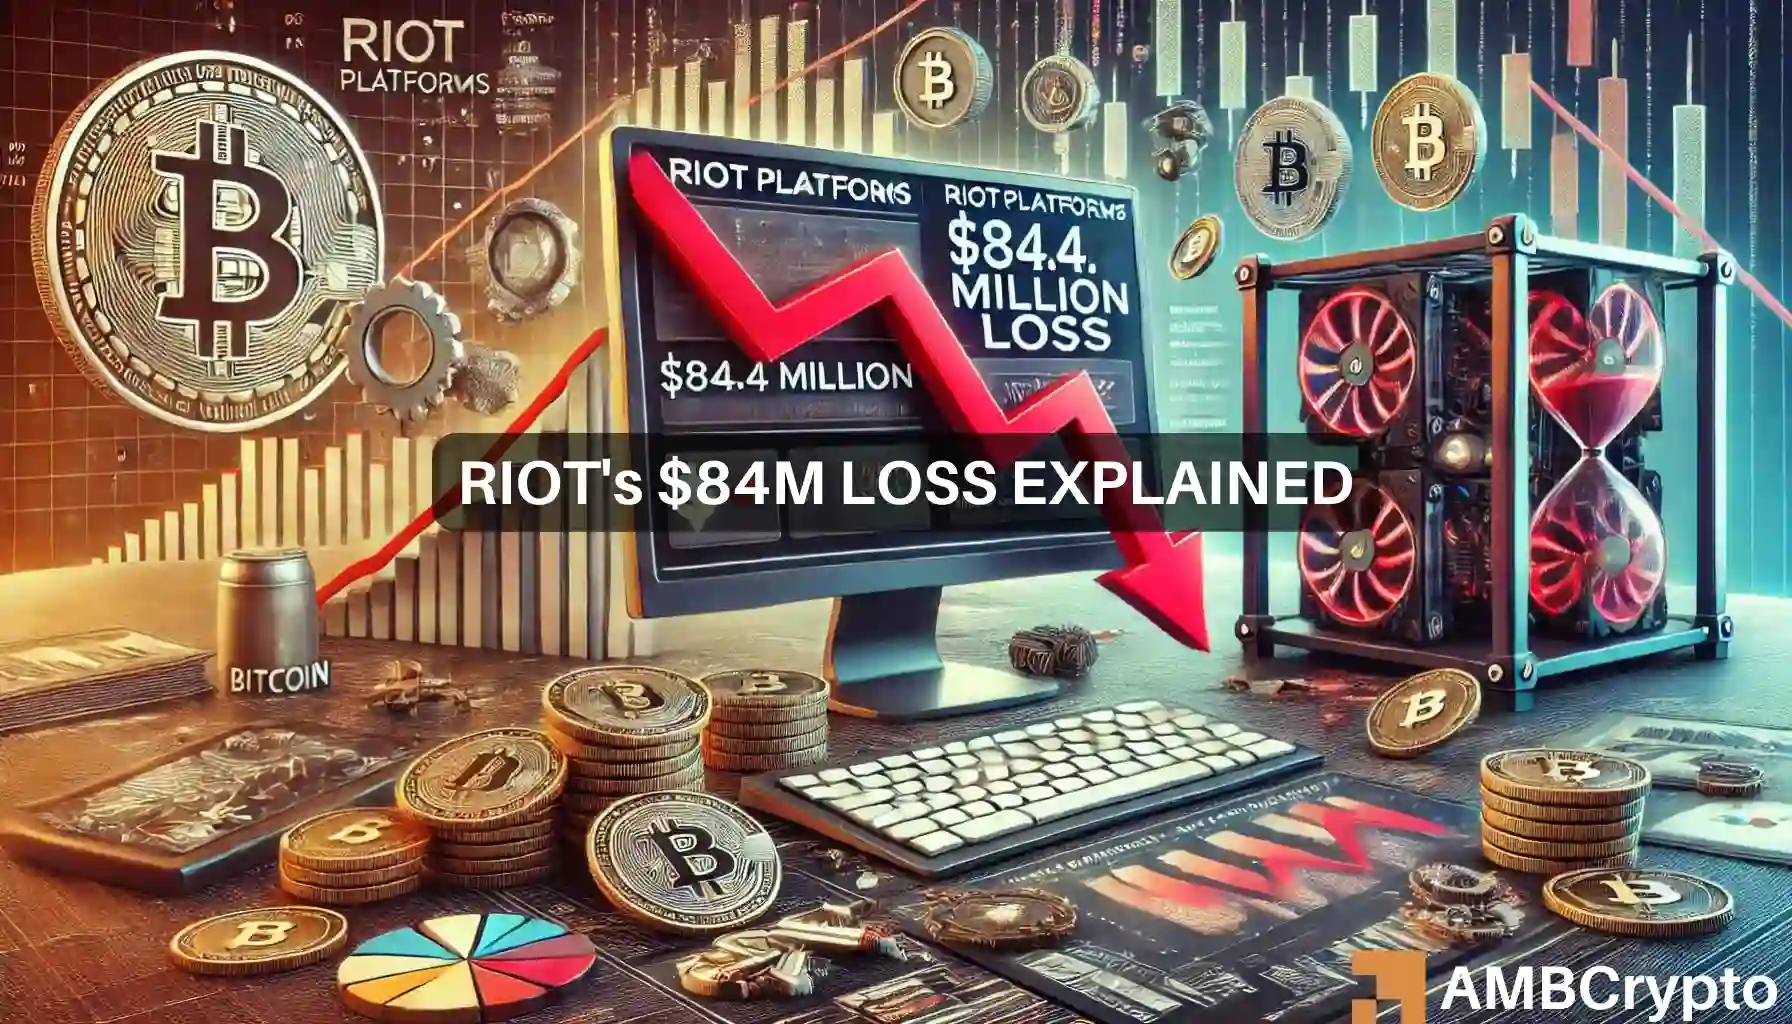 Riot Platforms’ Bitcoin production drops 52%, reports $84.4M loss